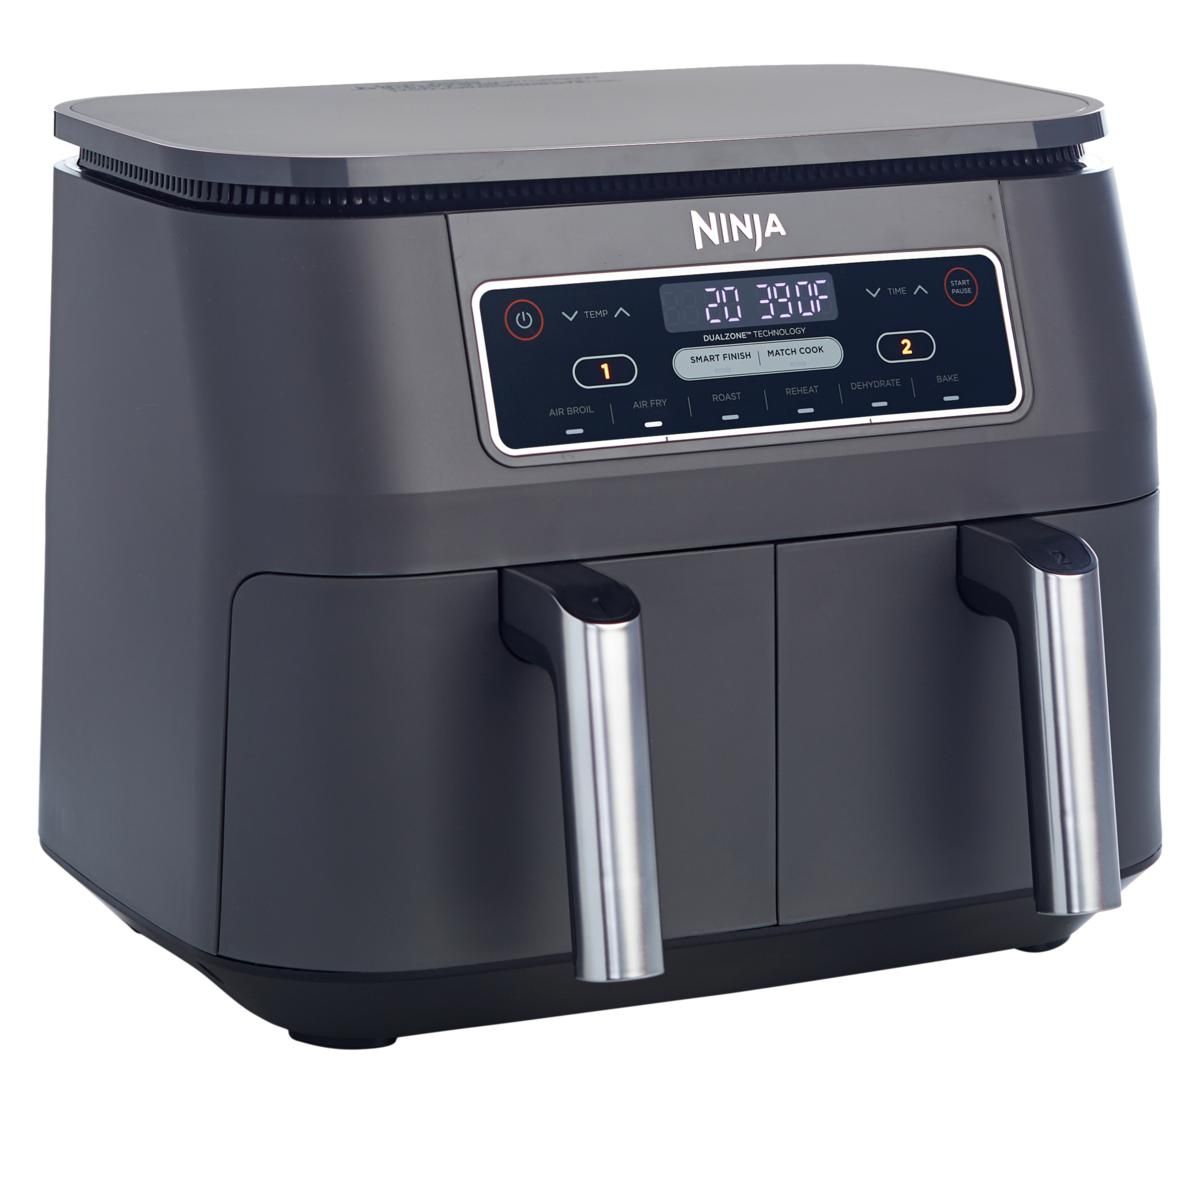 Ninja Foodi 6-in-1
8-Quart DualZone Air Fryer with Broil Rack - 9608435 | HSN | HSN